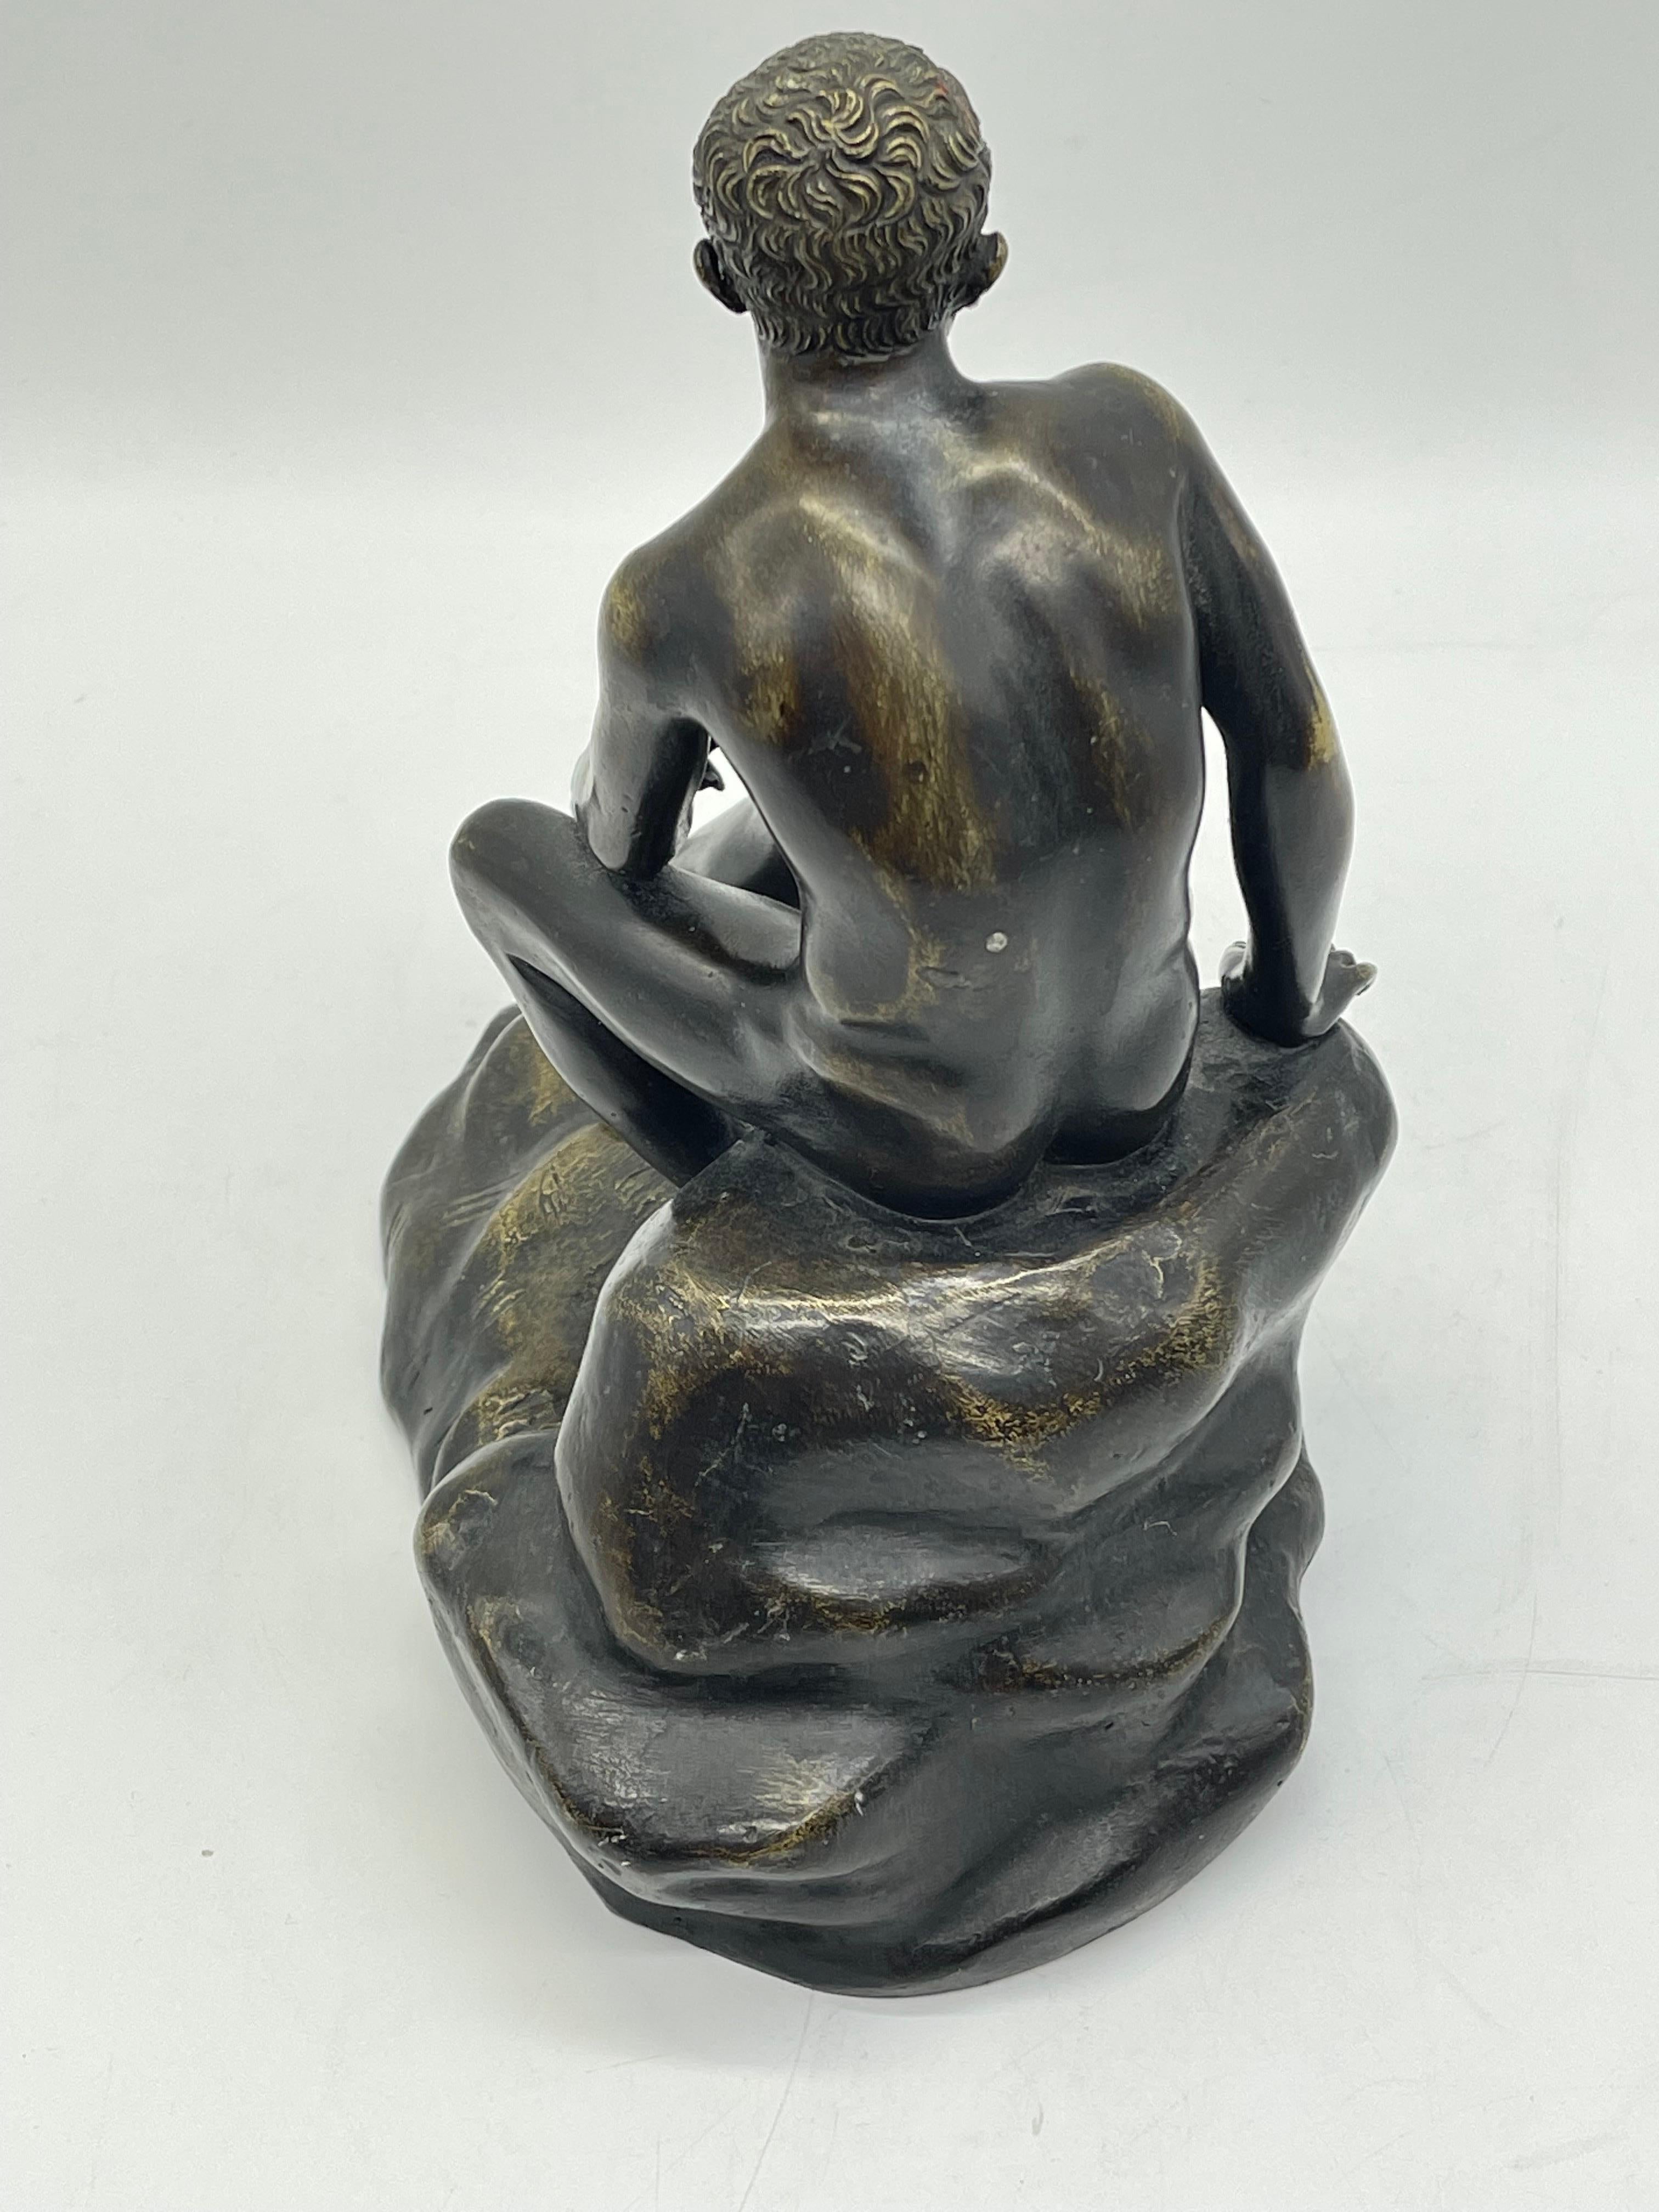 Seated athletic bronze sculpture / Figure Greek - Roman mythology For Sale 6